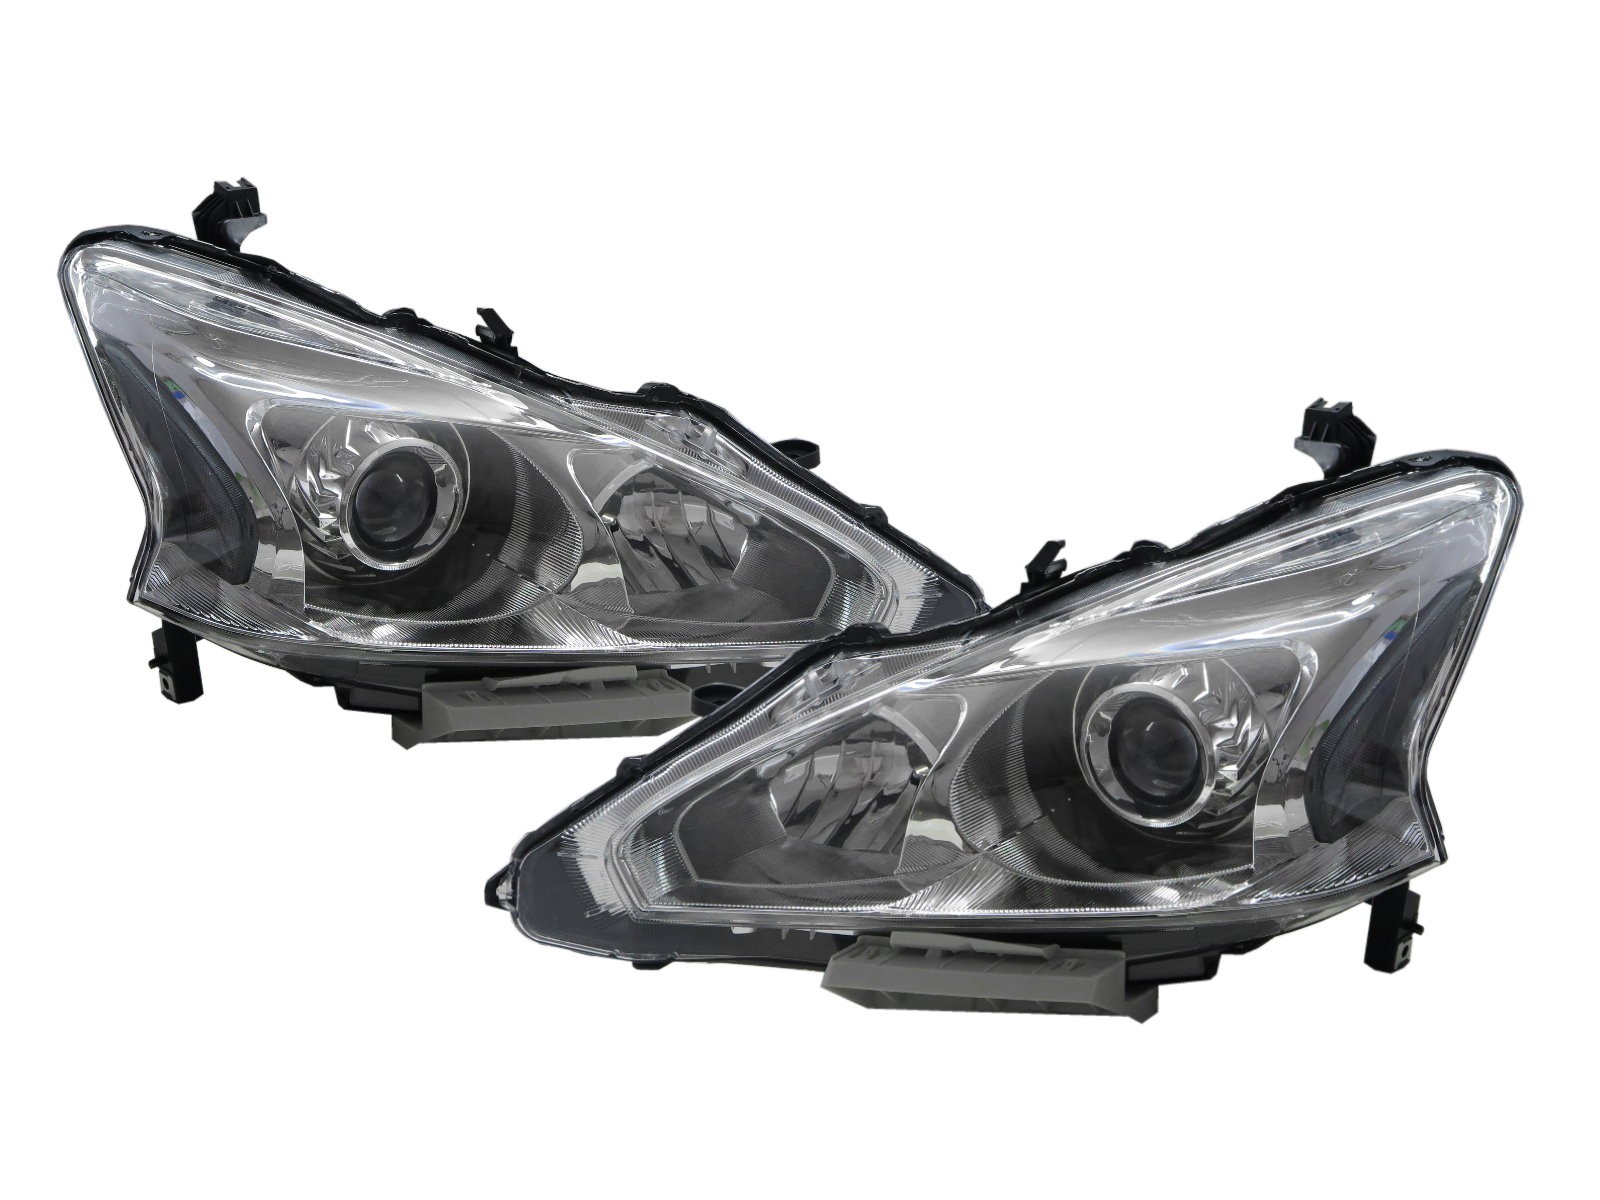 CrazyTheGod Teana L33 Fifth generation 2013-2015 PRE-FACELIFT Sedan 4D Projector Headlight Headlamp W/ Motor Chrome for NISSAN RHD